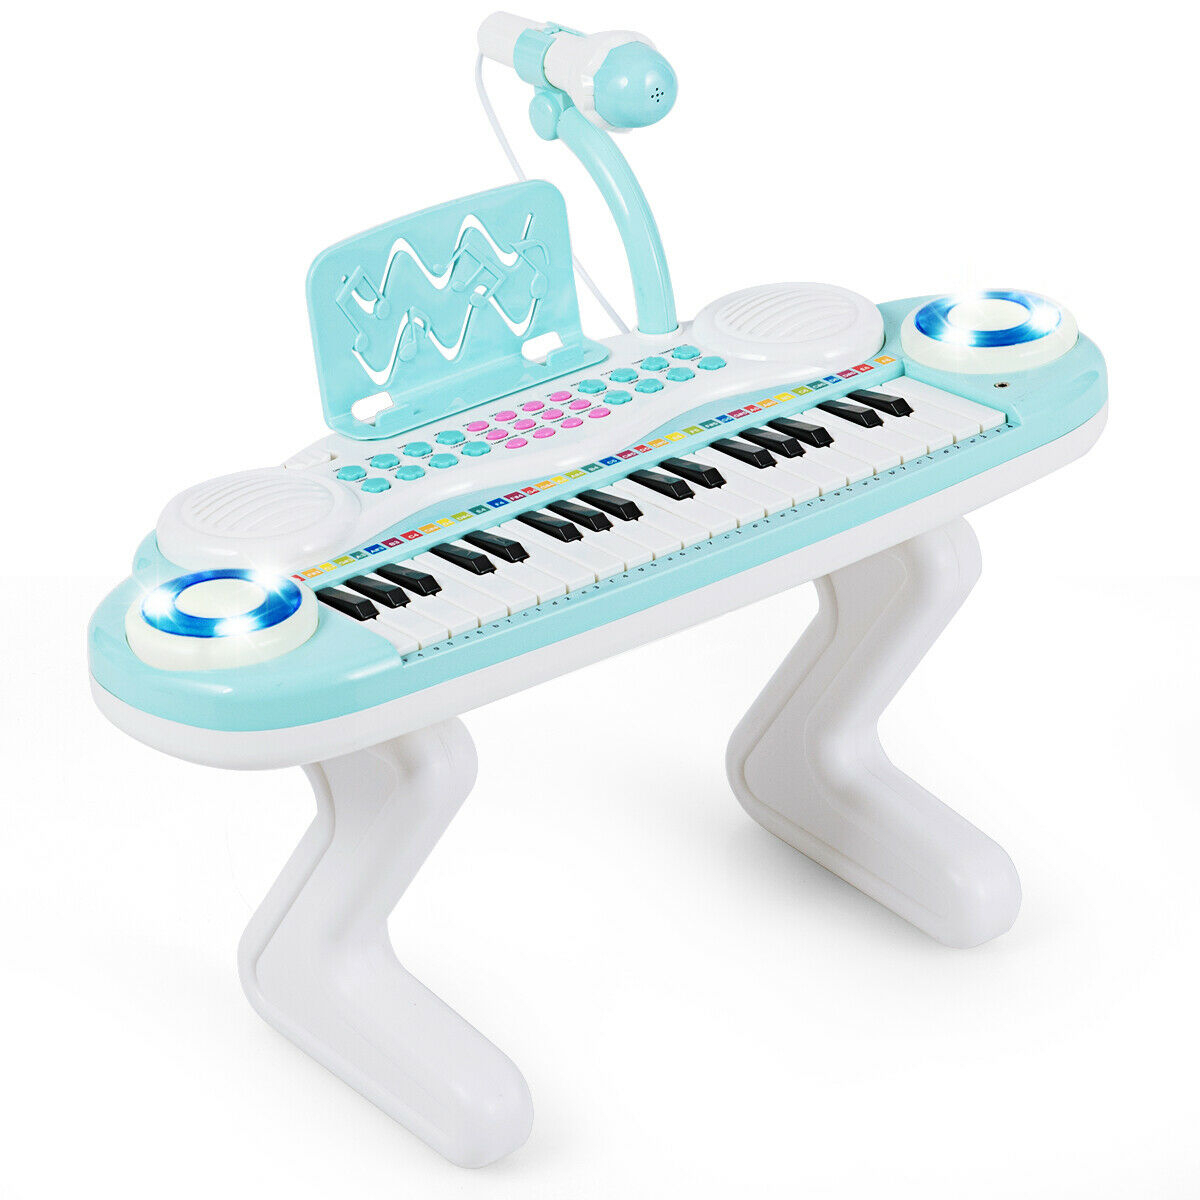 Z-Shaped Kids Toy Keyboard 37-Key Electronic Piano - Pink